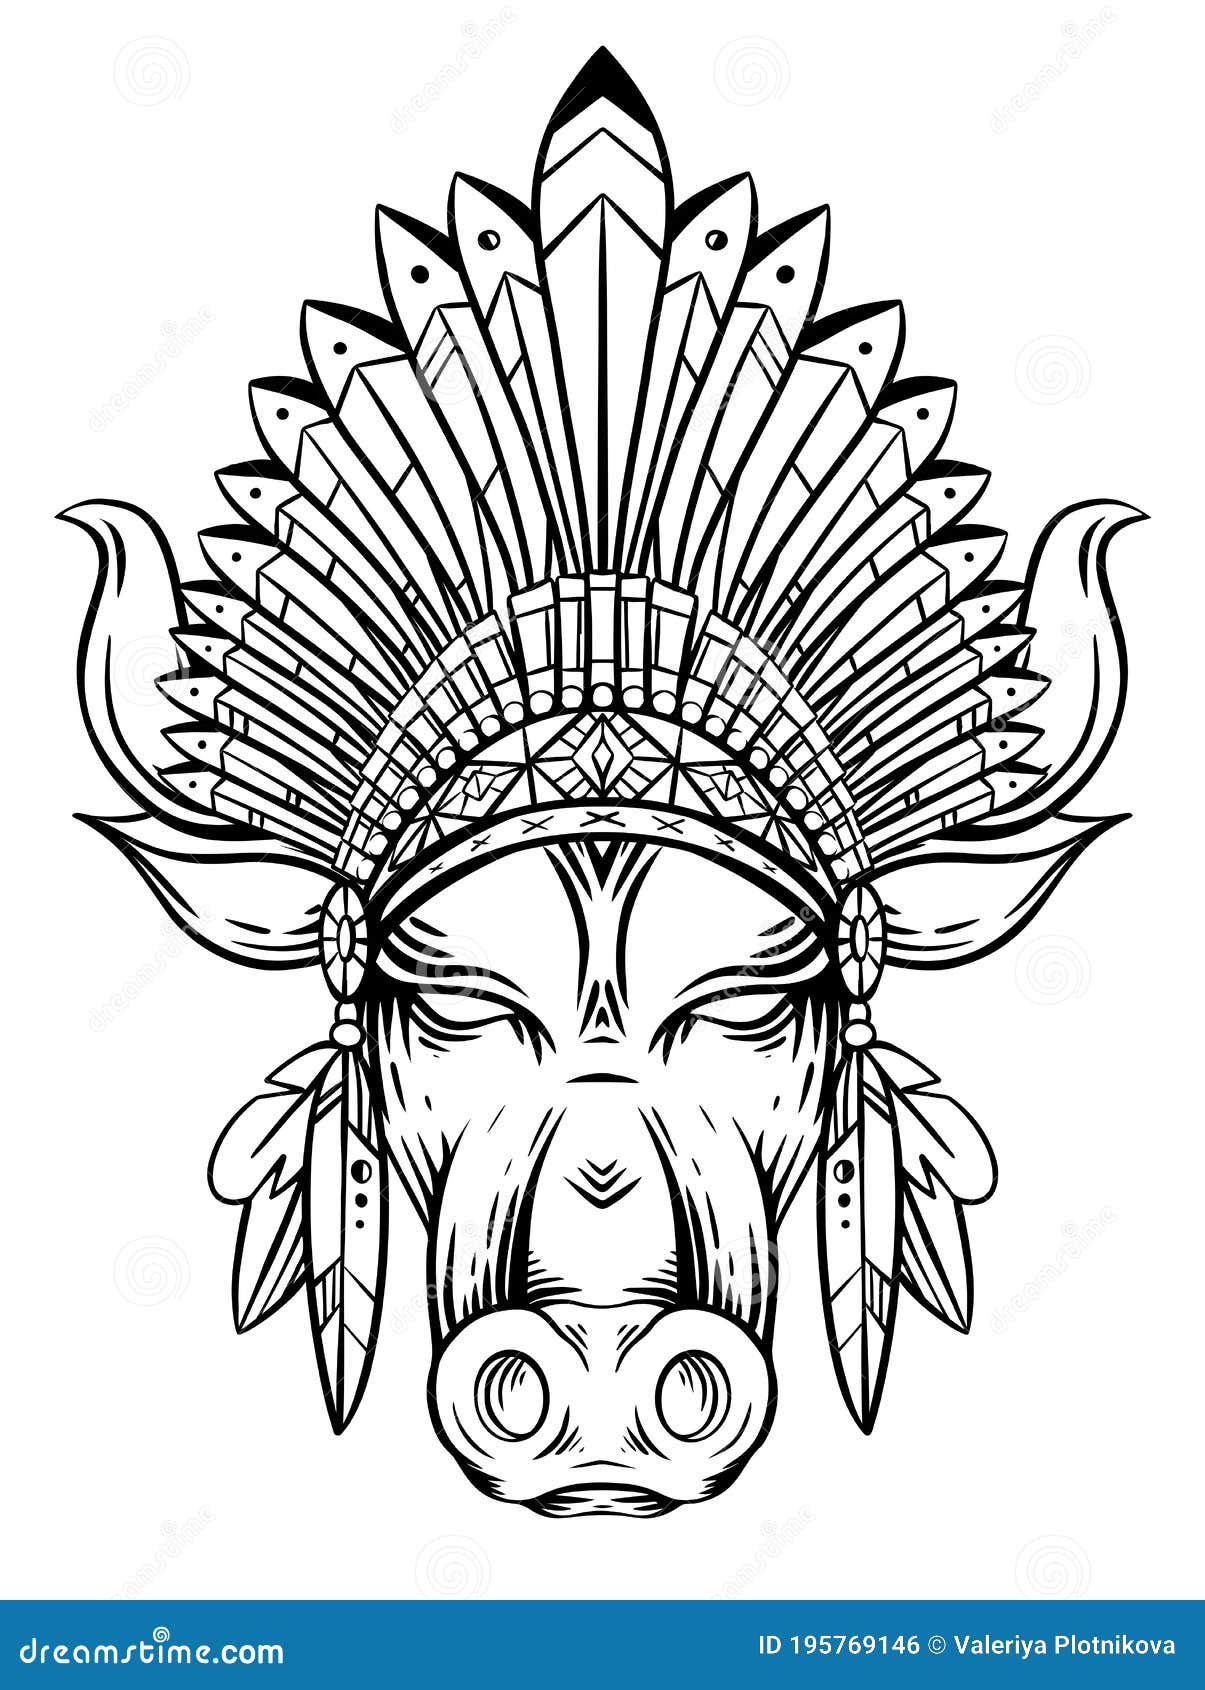 15963 Buffalo Tattoo Images Stock Photos  Vectors  Shutterstock